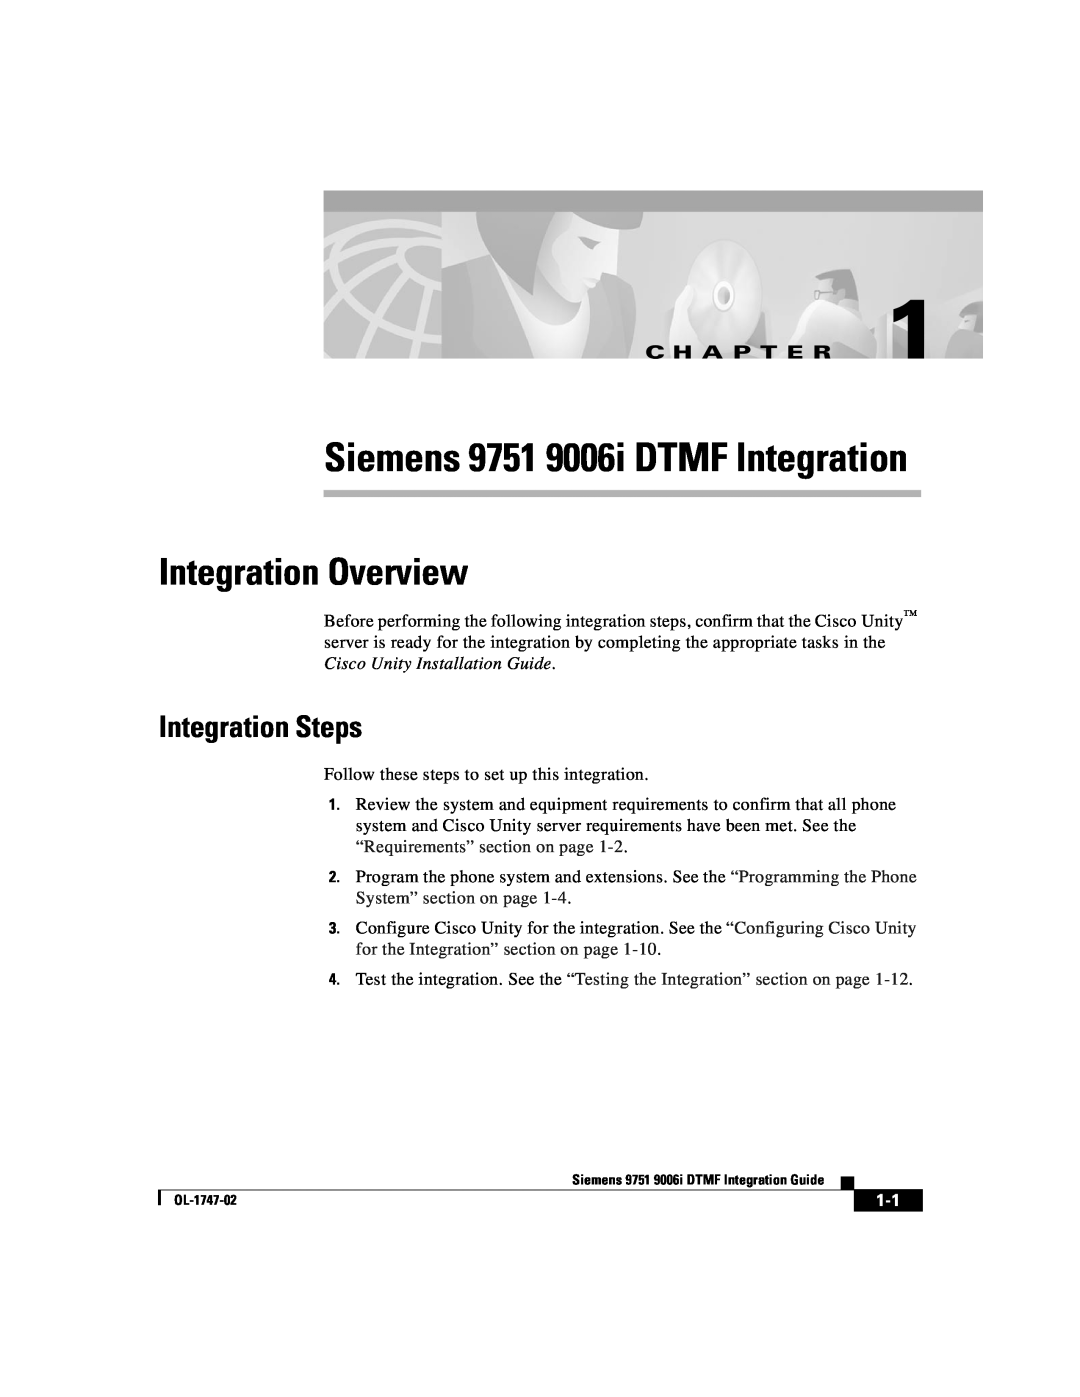 Able Planet OL-1747-02 manual Integration Overview, Integration Steps, C H A P T E R, Siemens 9751 9006i DTMF Integration 